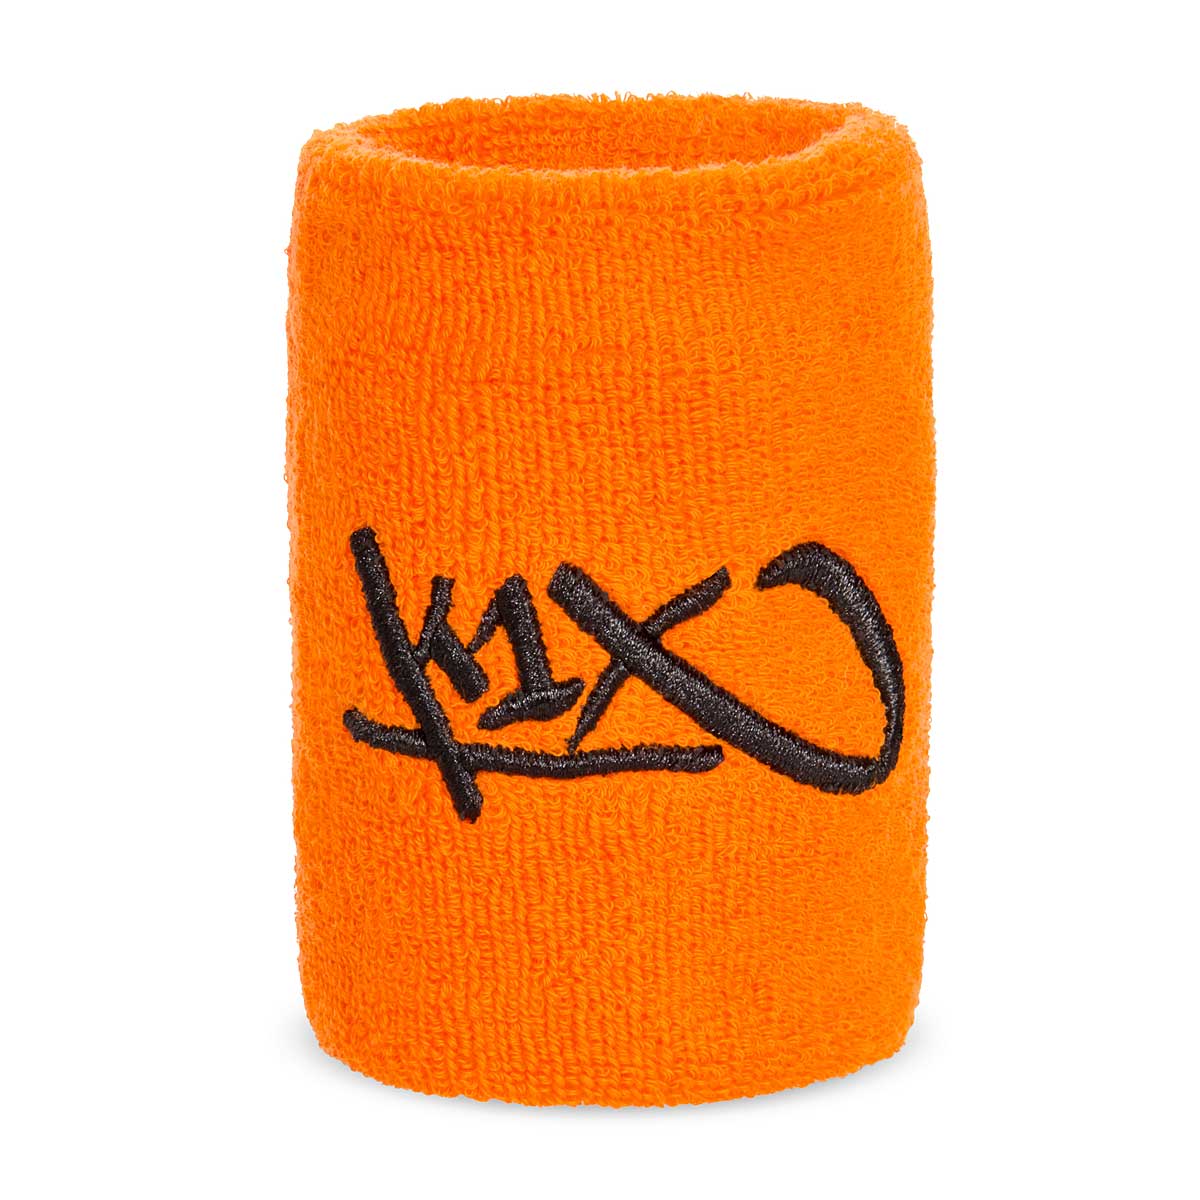 K1X Hardwood Wristbands, Orange